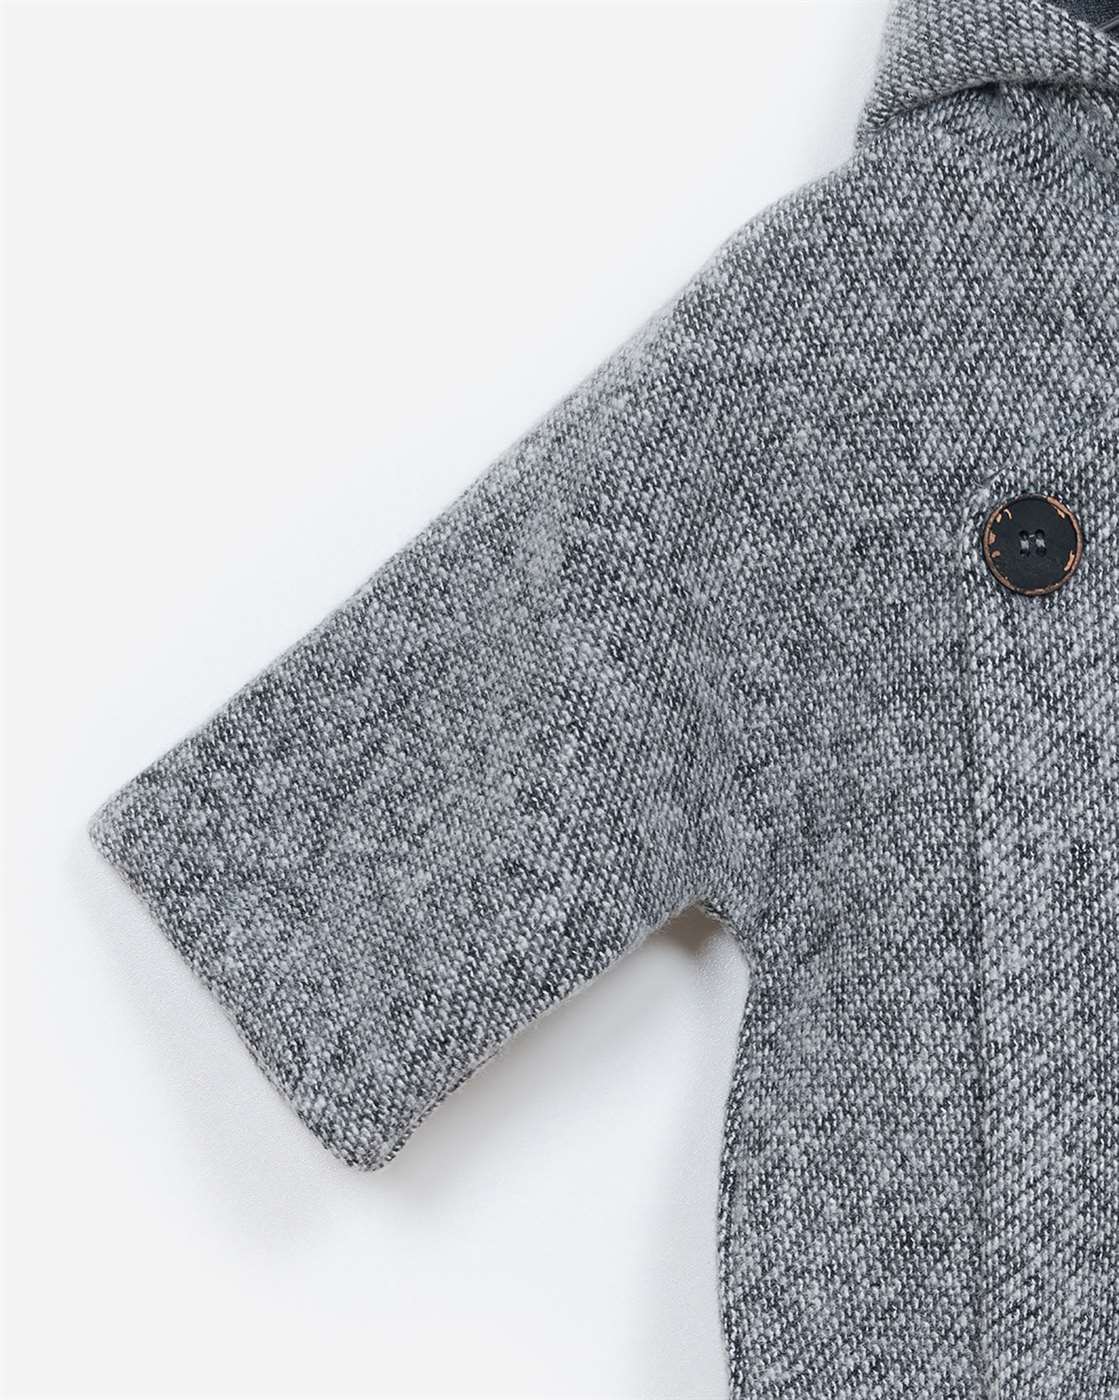 BeeBoo|BeeBoo PlayUp vêtements bébé baby clothes manteau Felpa coat gris grey 2